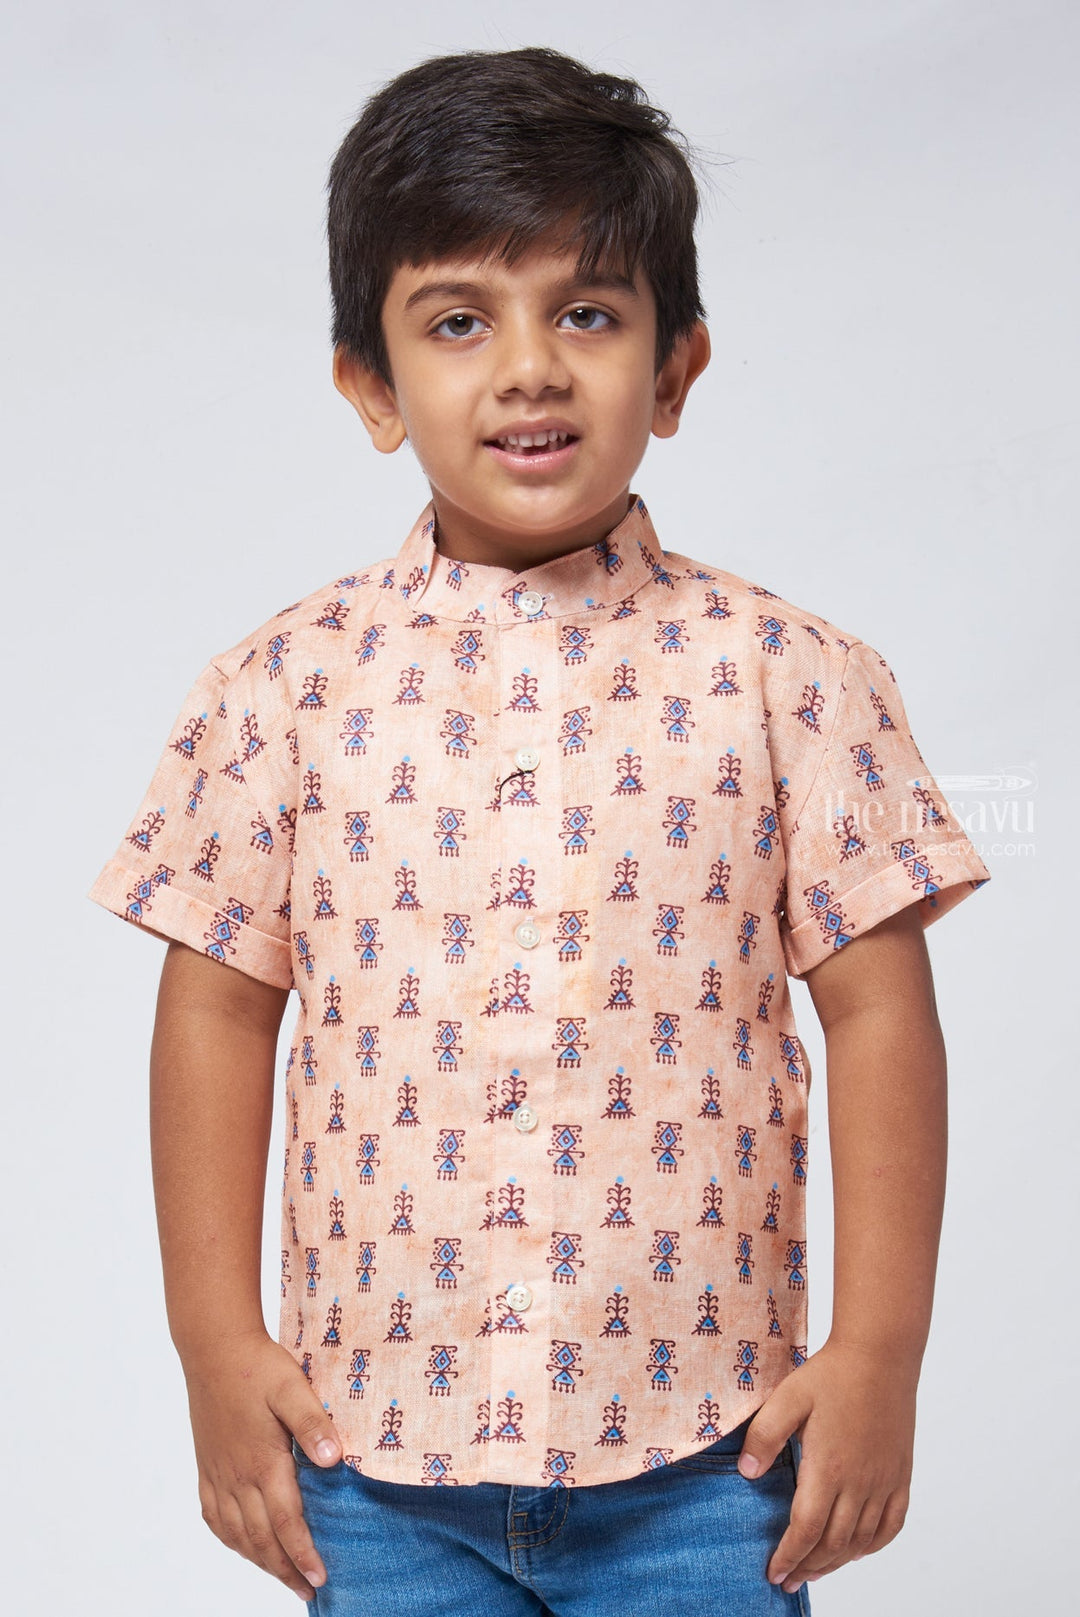 The Nesavu Boys Linen Shirt Classic Comfort Boys Premium Quality Shirt for Every Occasion Nesavu 14 (6M) / Orange / Linen BS078A-14 Boys Casual Shirt Online | Buy Premium Linen Shirt | the Nesavu